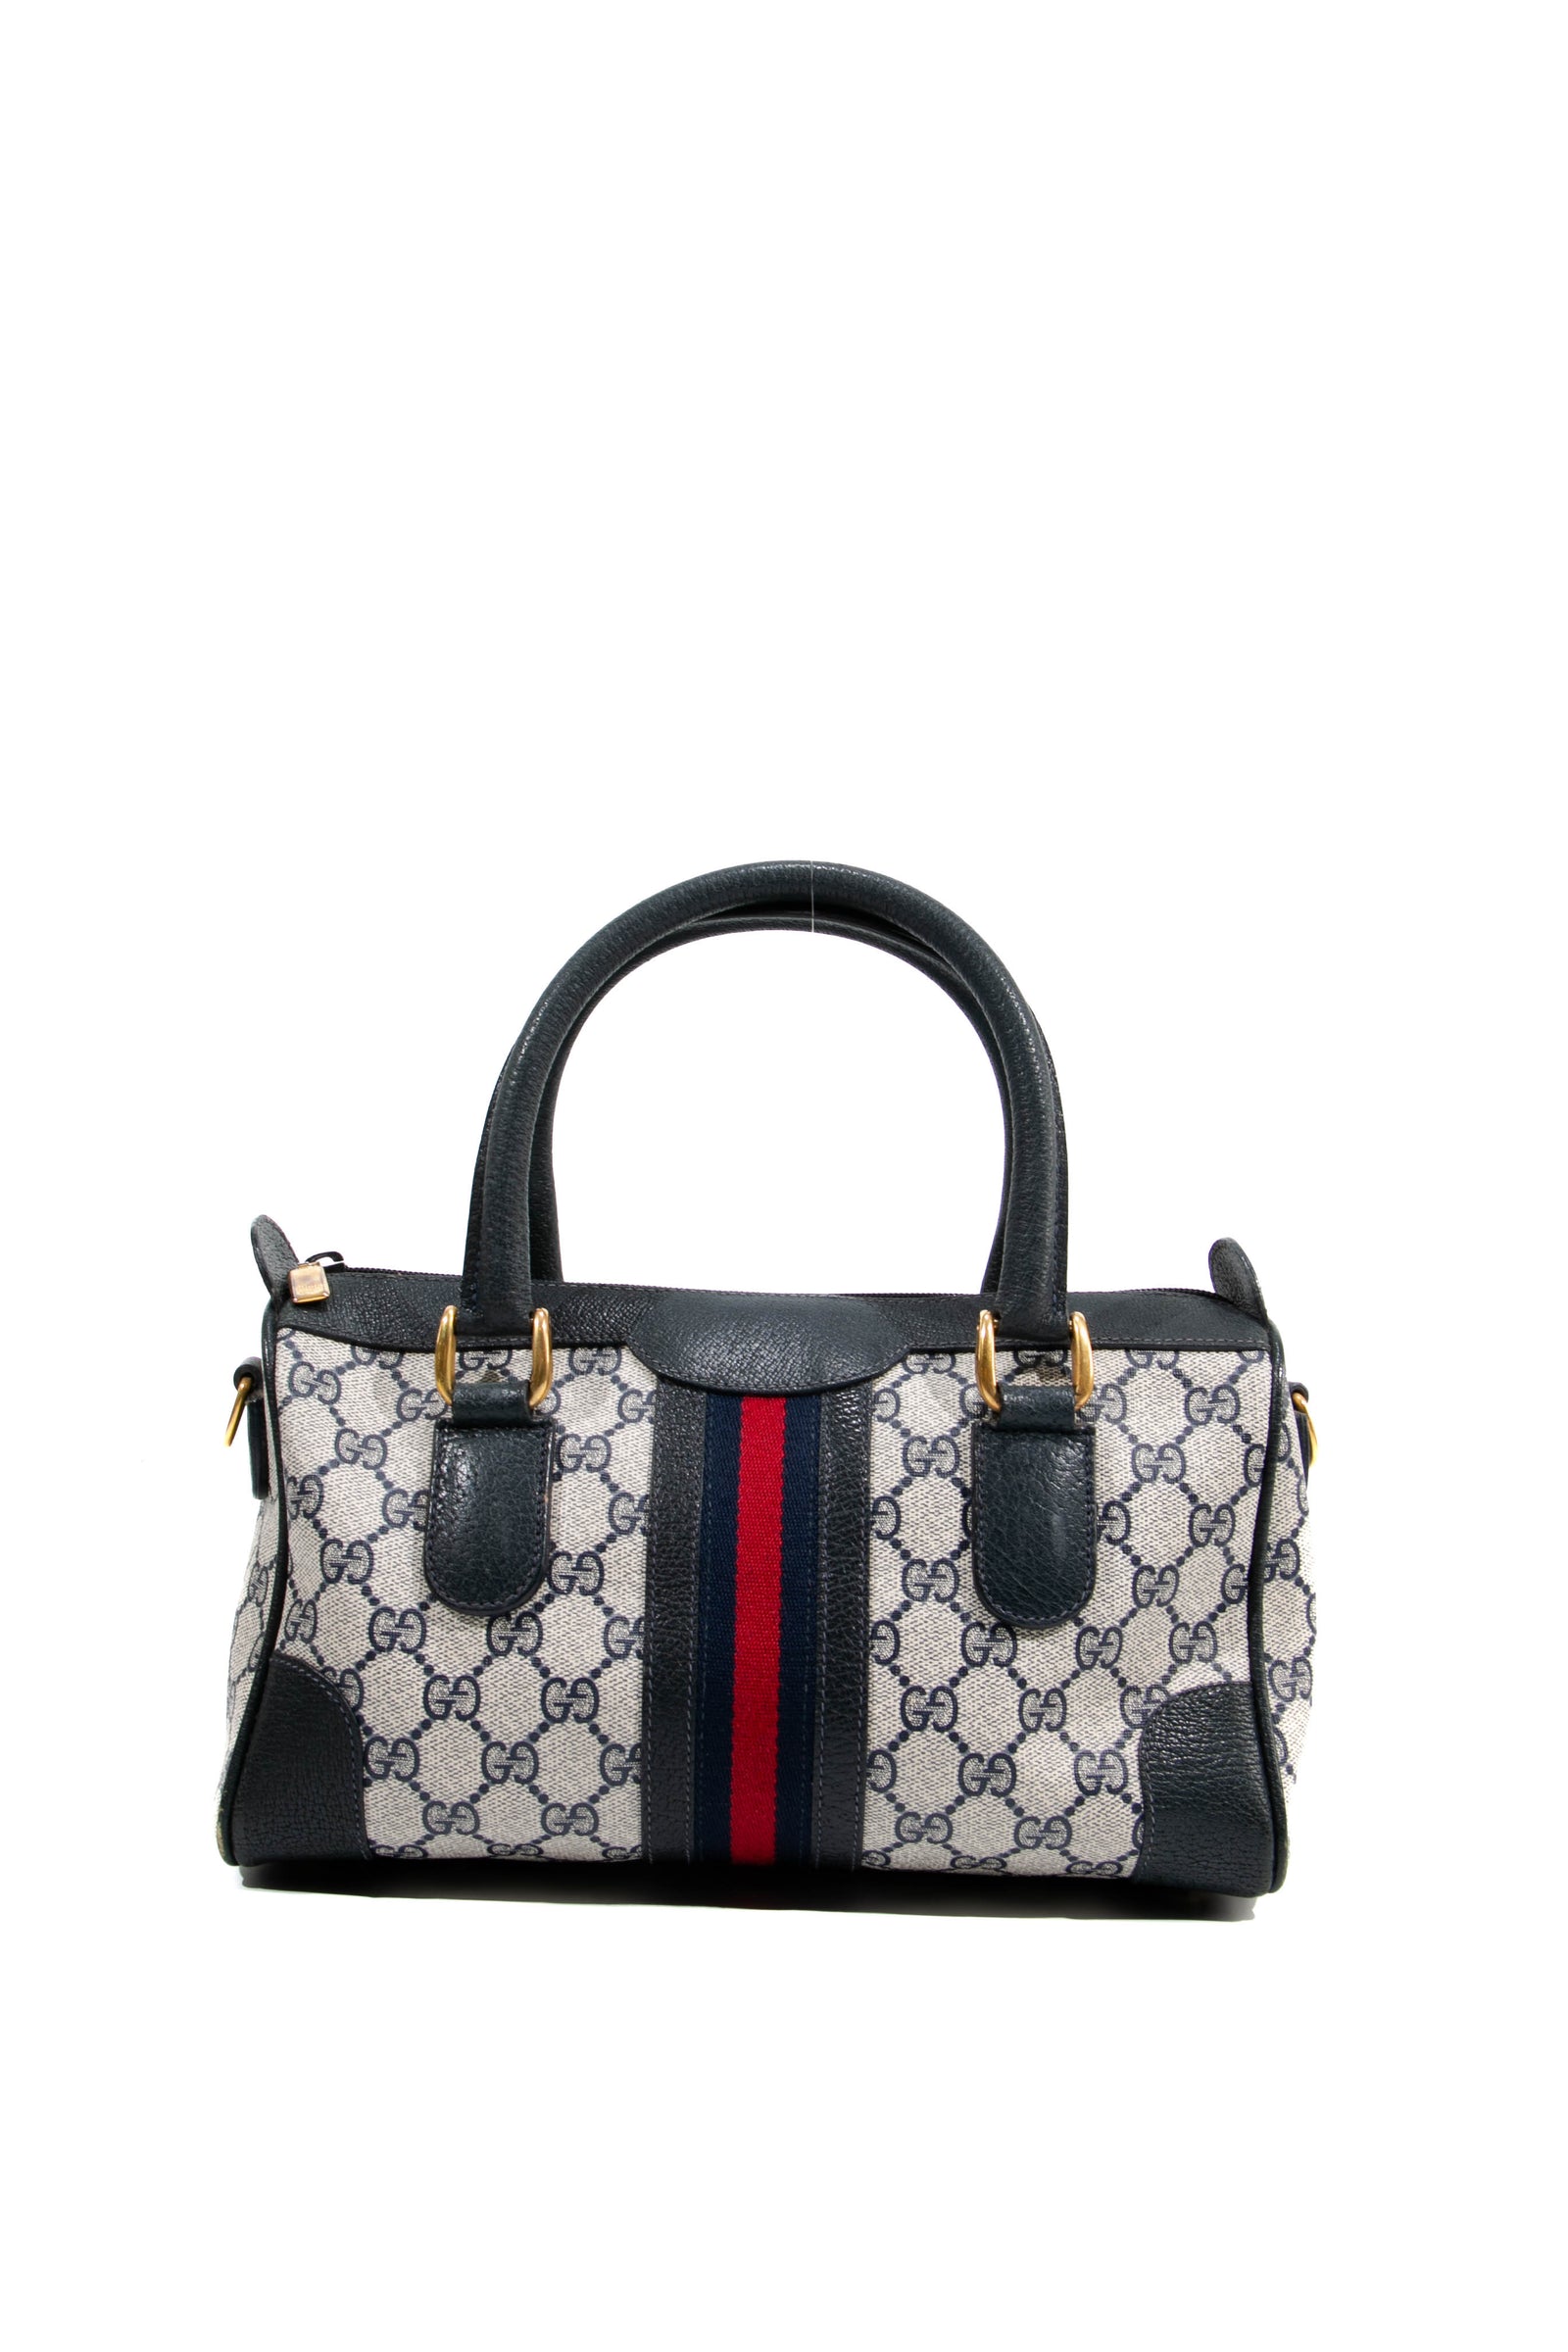 Buy Wholesale China Women Fashion Handbags Wallet Tote Bag